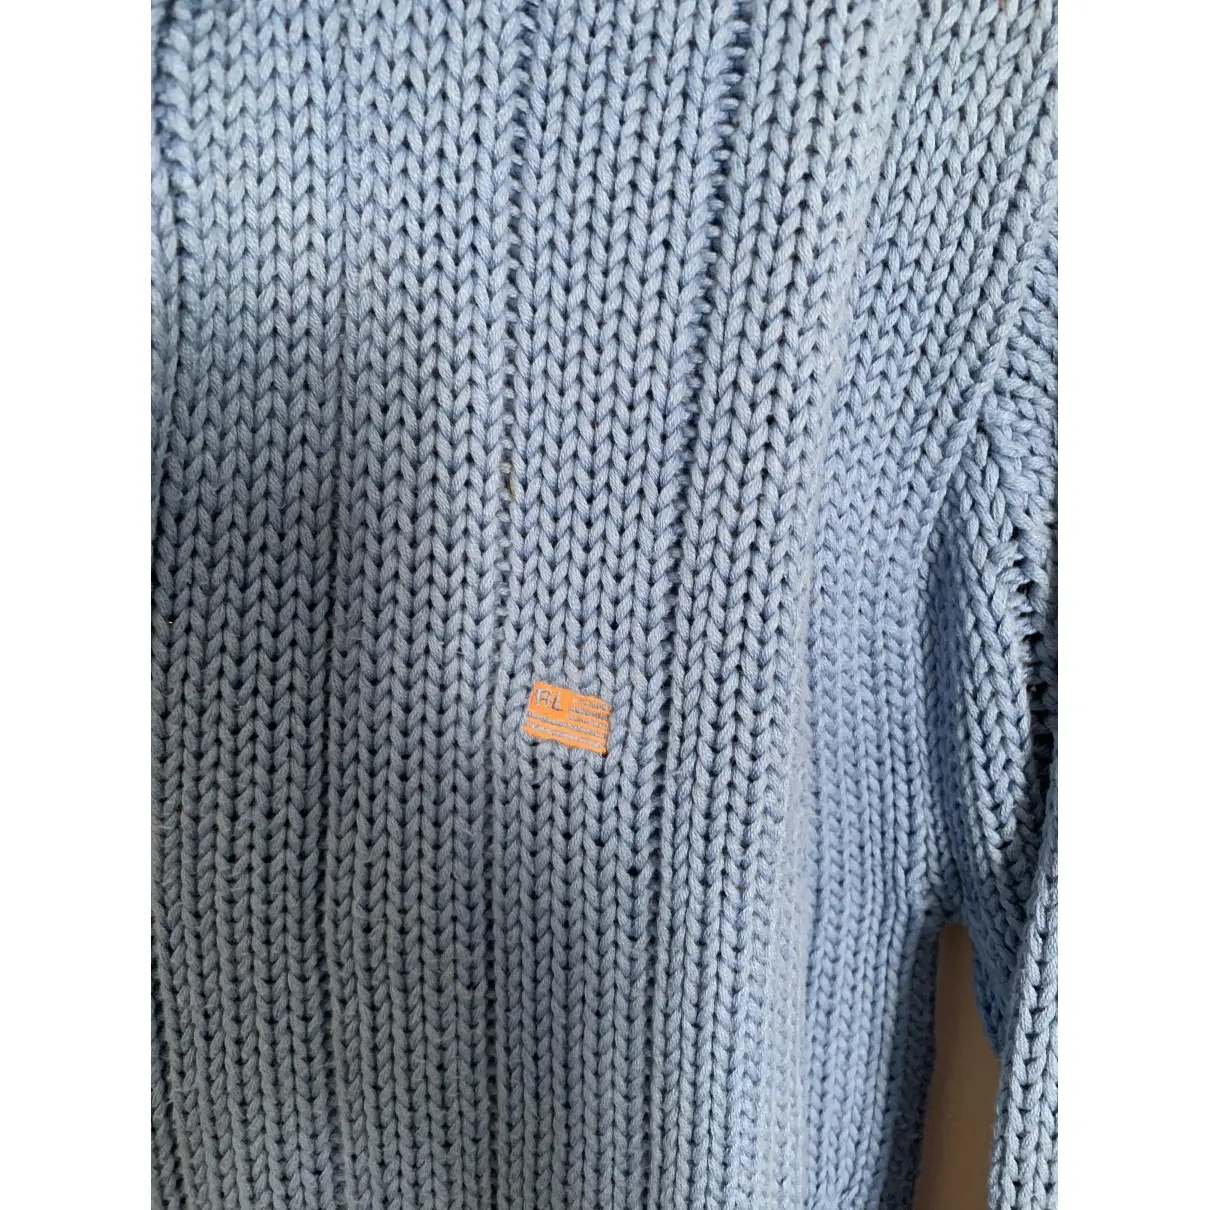 Blue Cotton Knitwear & Sweatshirt Ralph Lauren